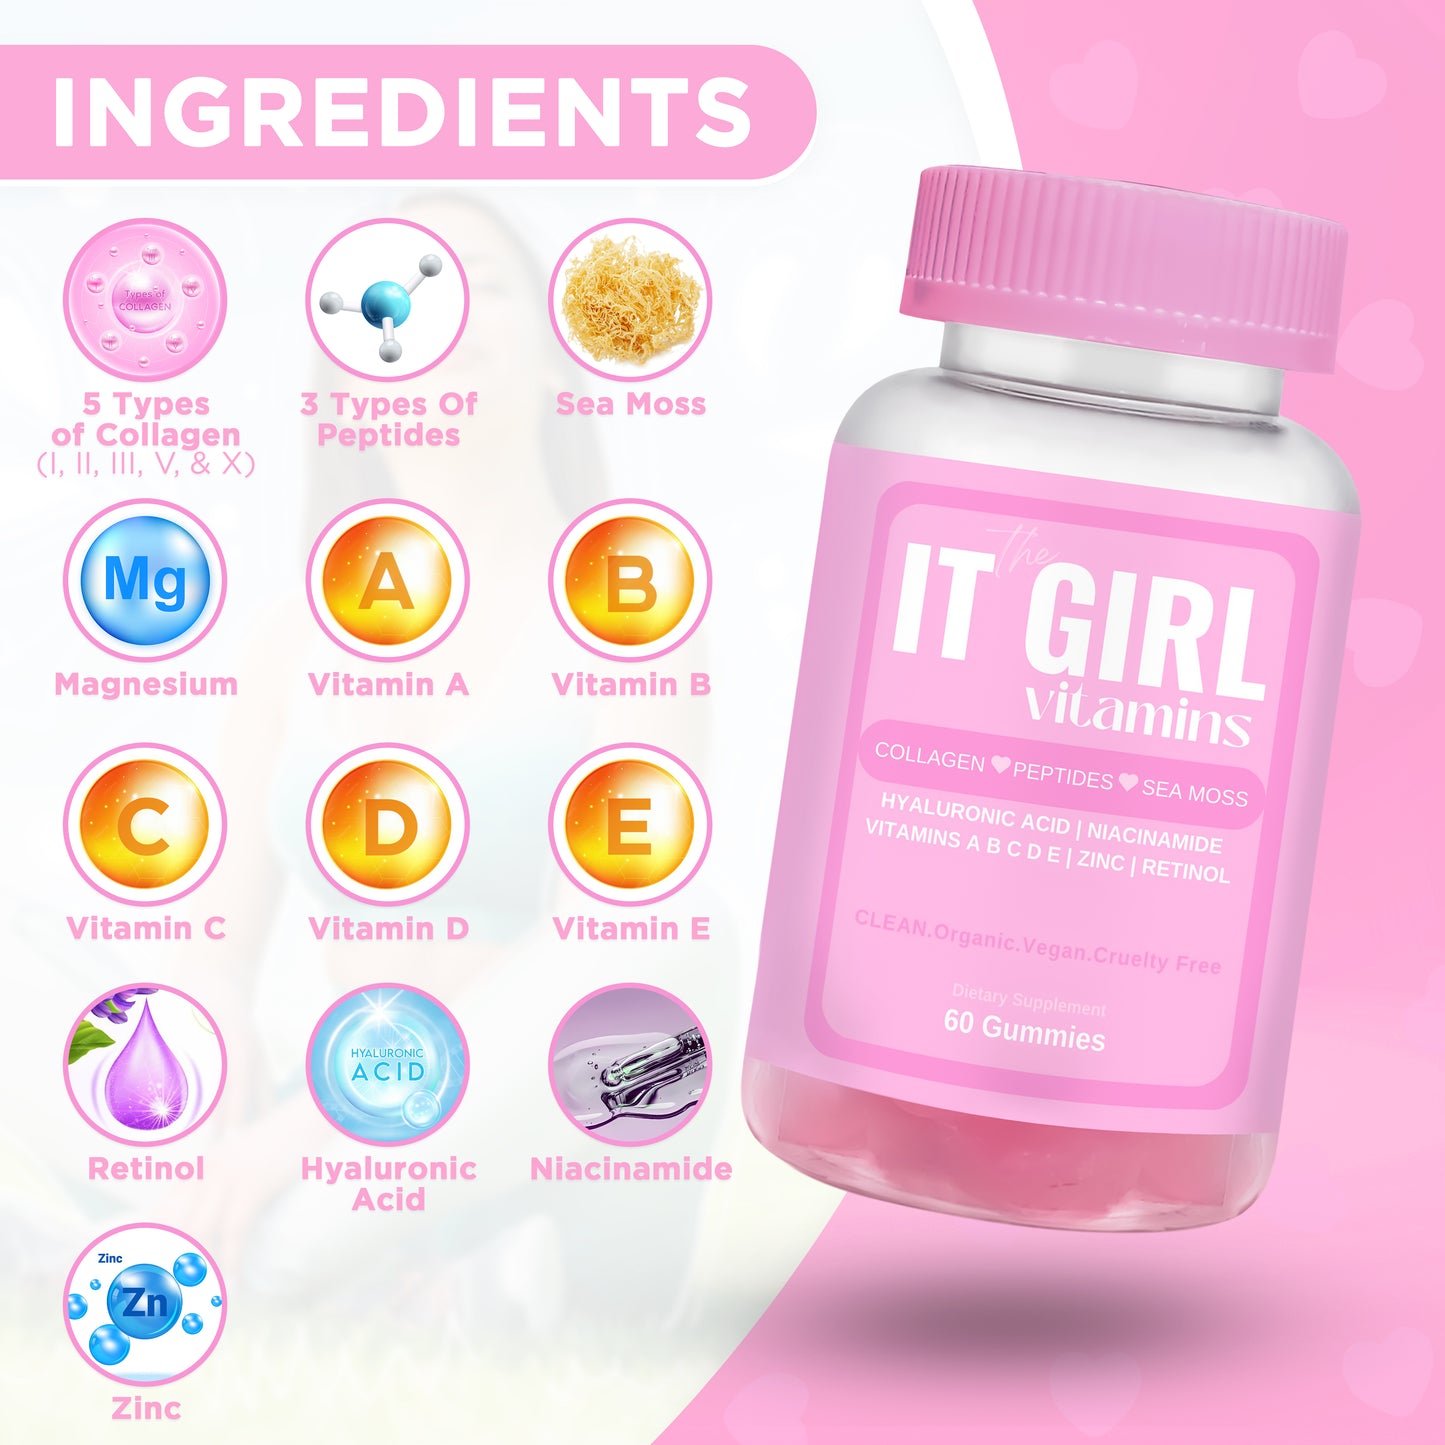 It Girl Vitamins